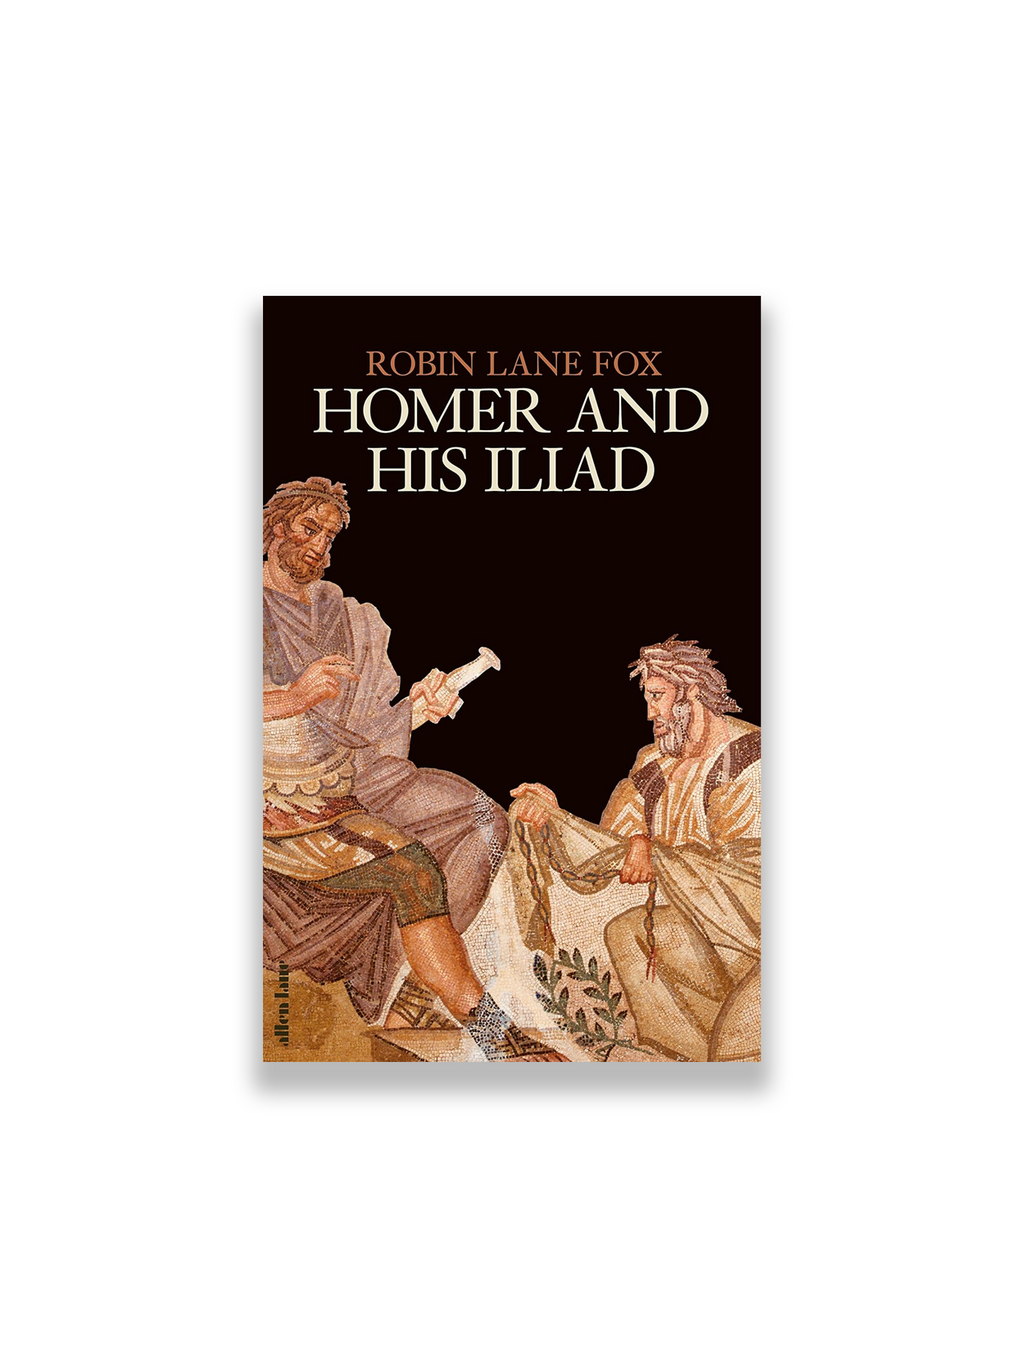 Homer and His Iliad